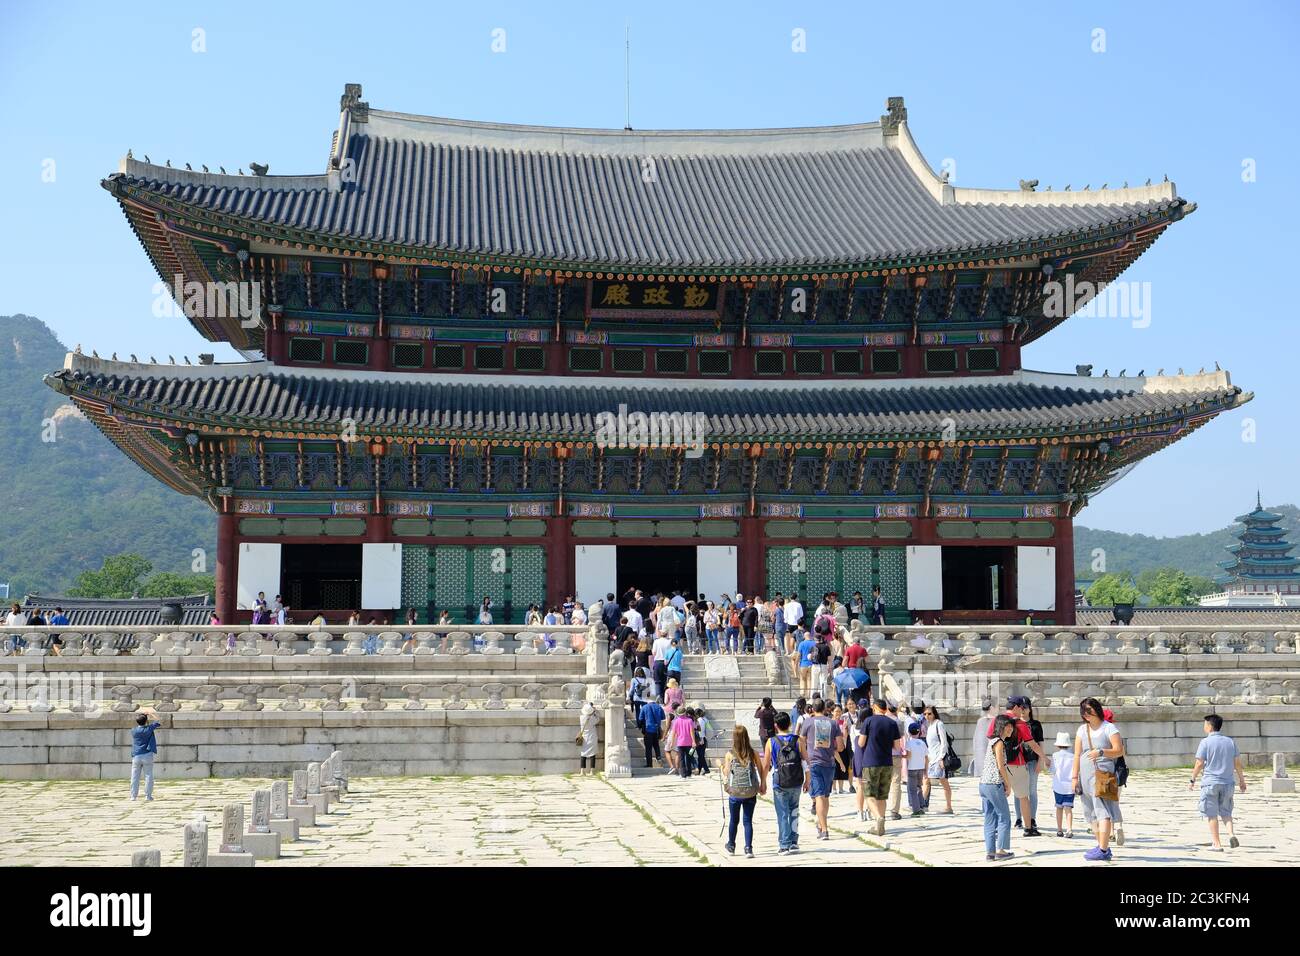 Seoul South Korea - Gyeongbokgung Palace Throne Hall Compound with Geunjeongjeon Hall Stock Photo